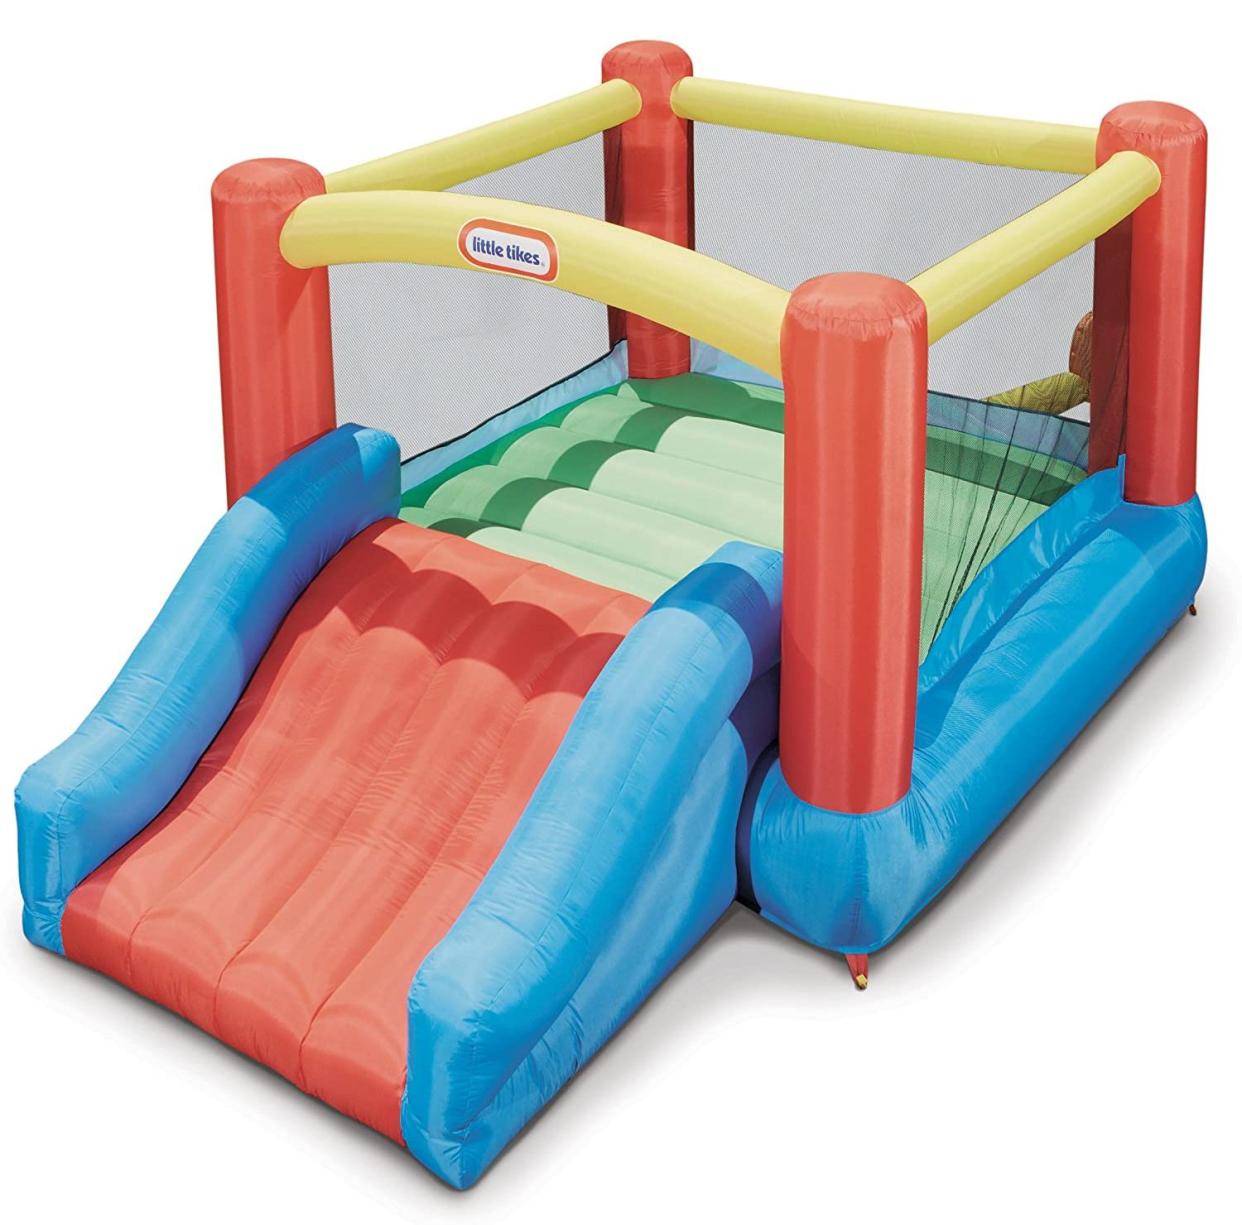 Little Tikes Jr. Jump ’n Slide Inflatable Bounce House